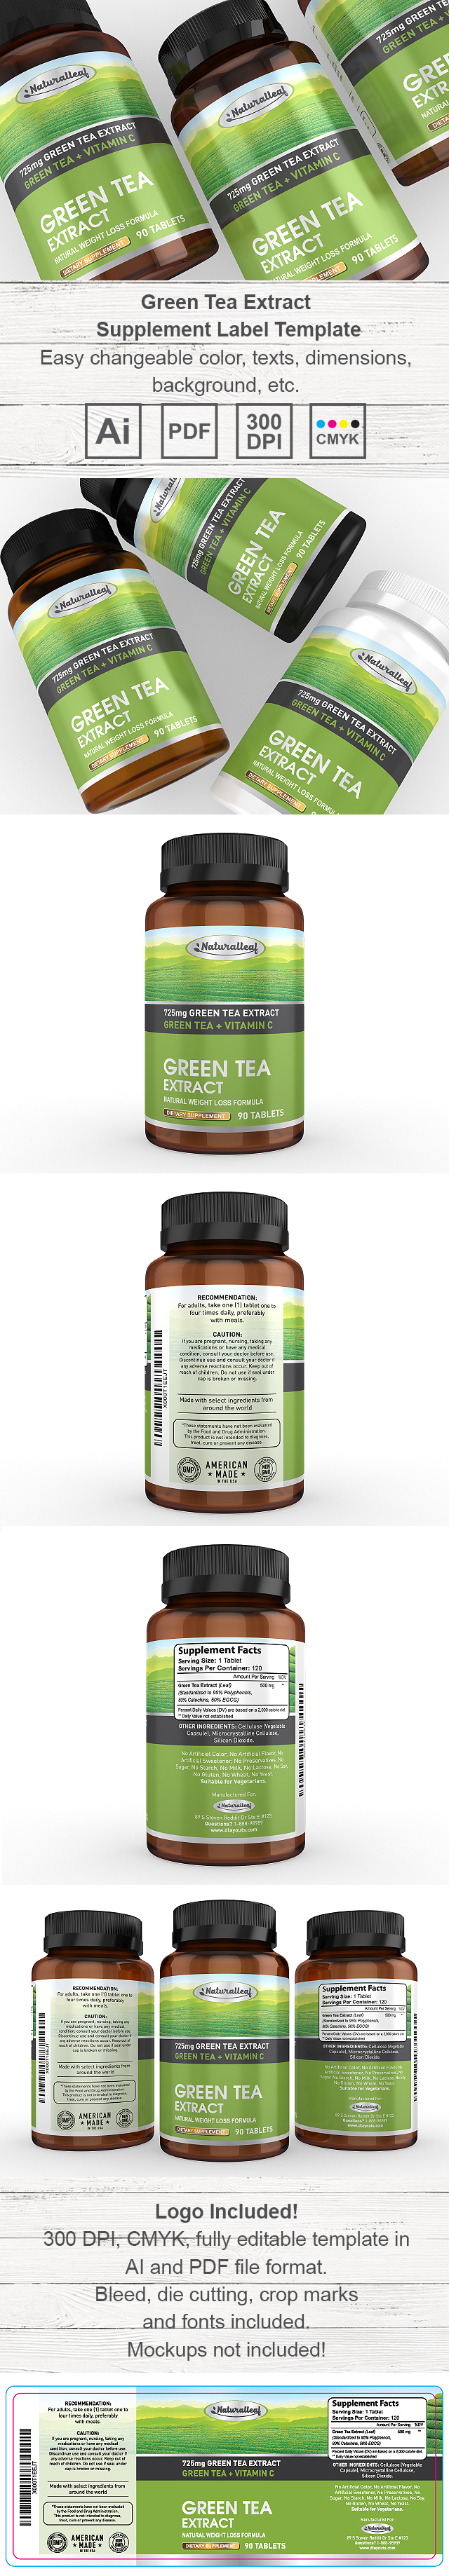 Green Tea Extract Supplement Label Template